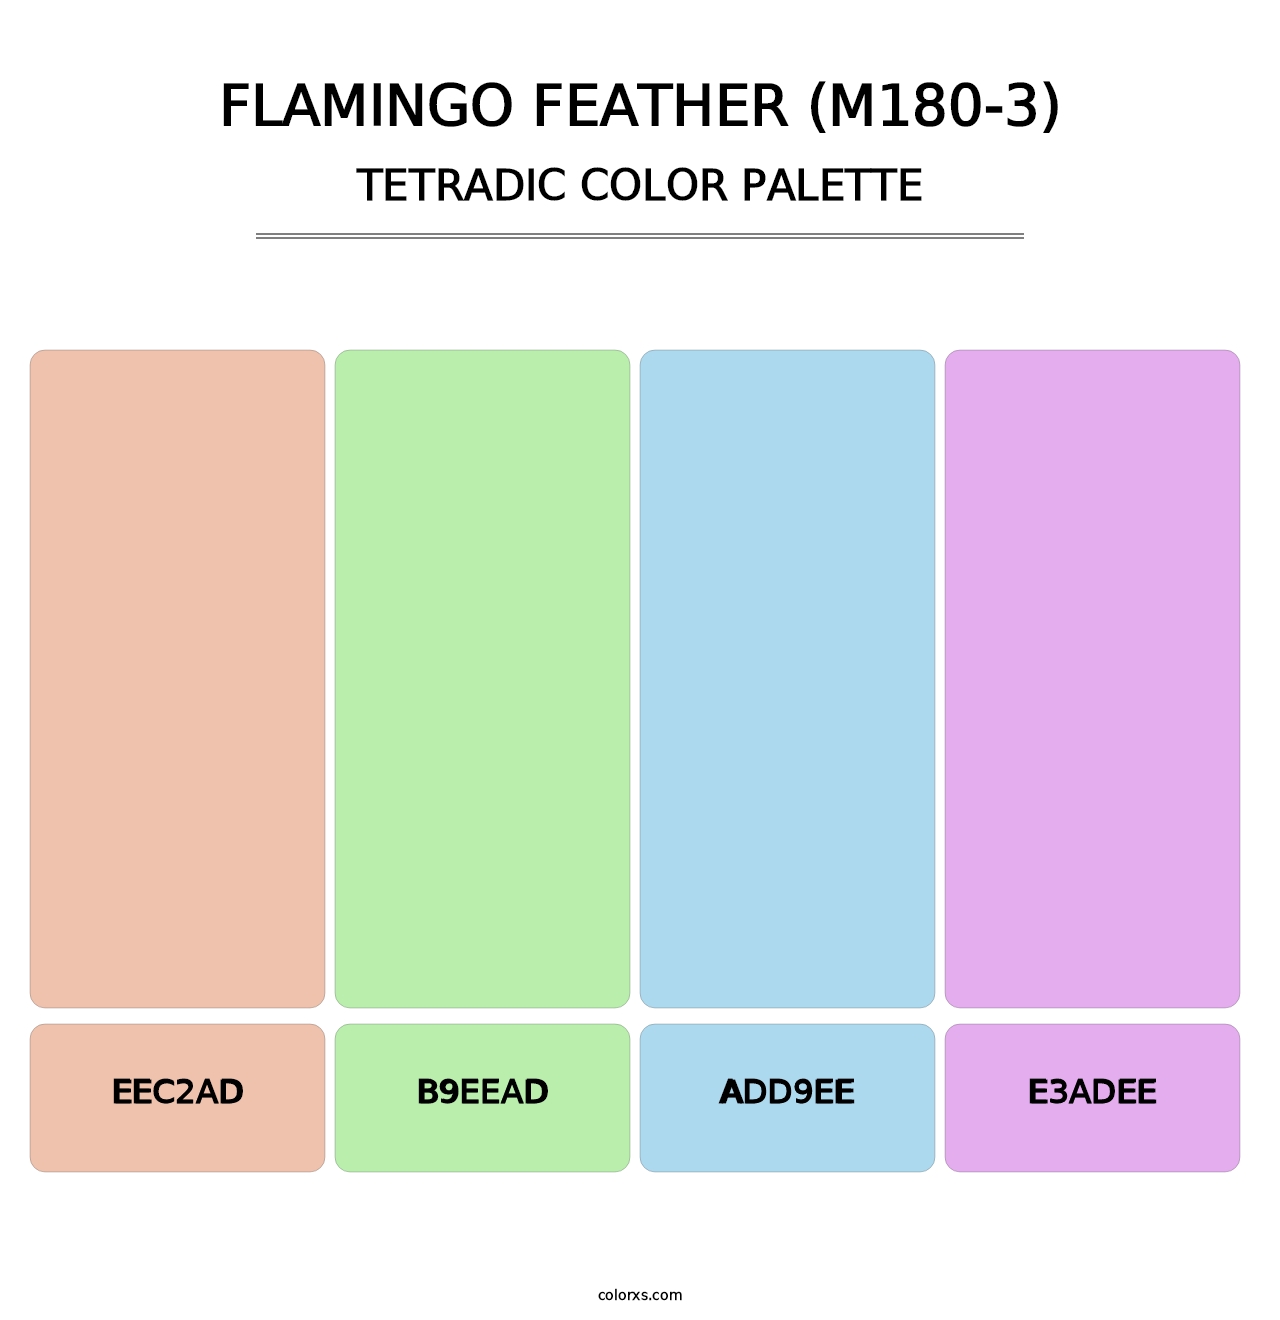 Flamingo Feather (M180-3) - Tetradic Color Palette